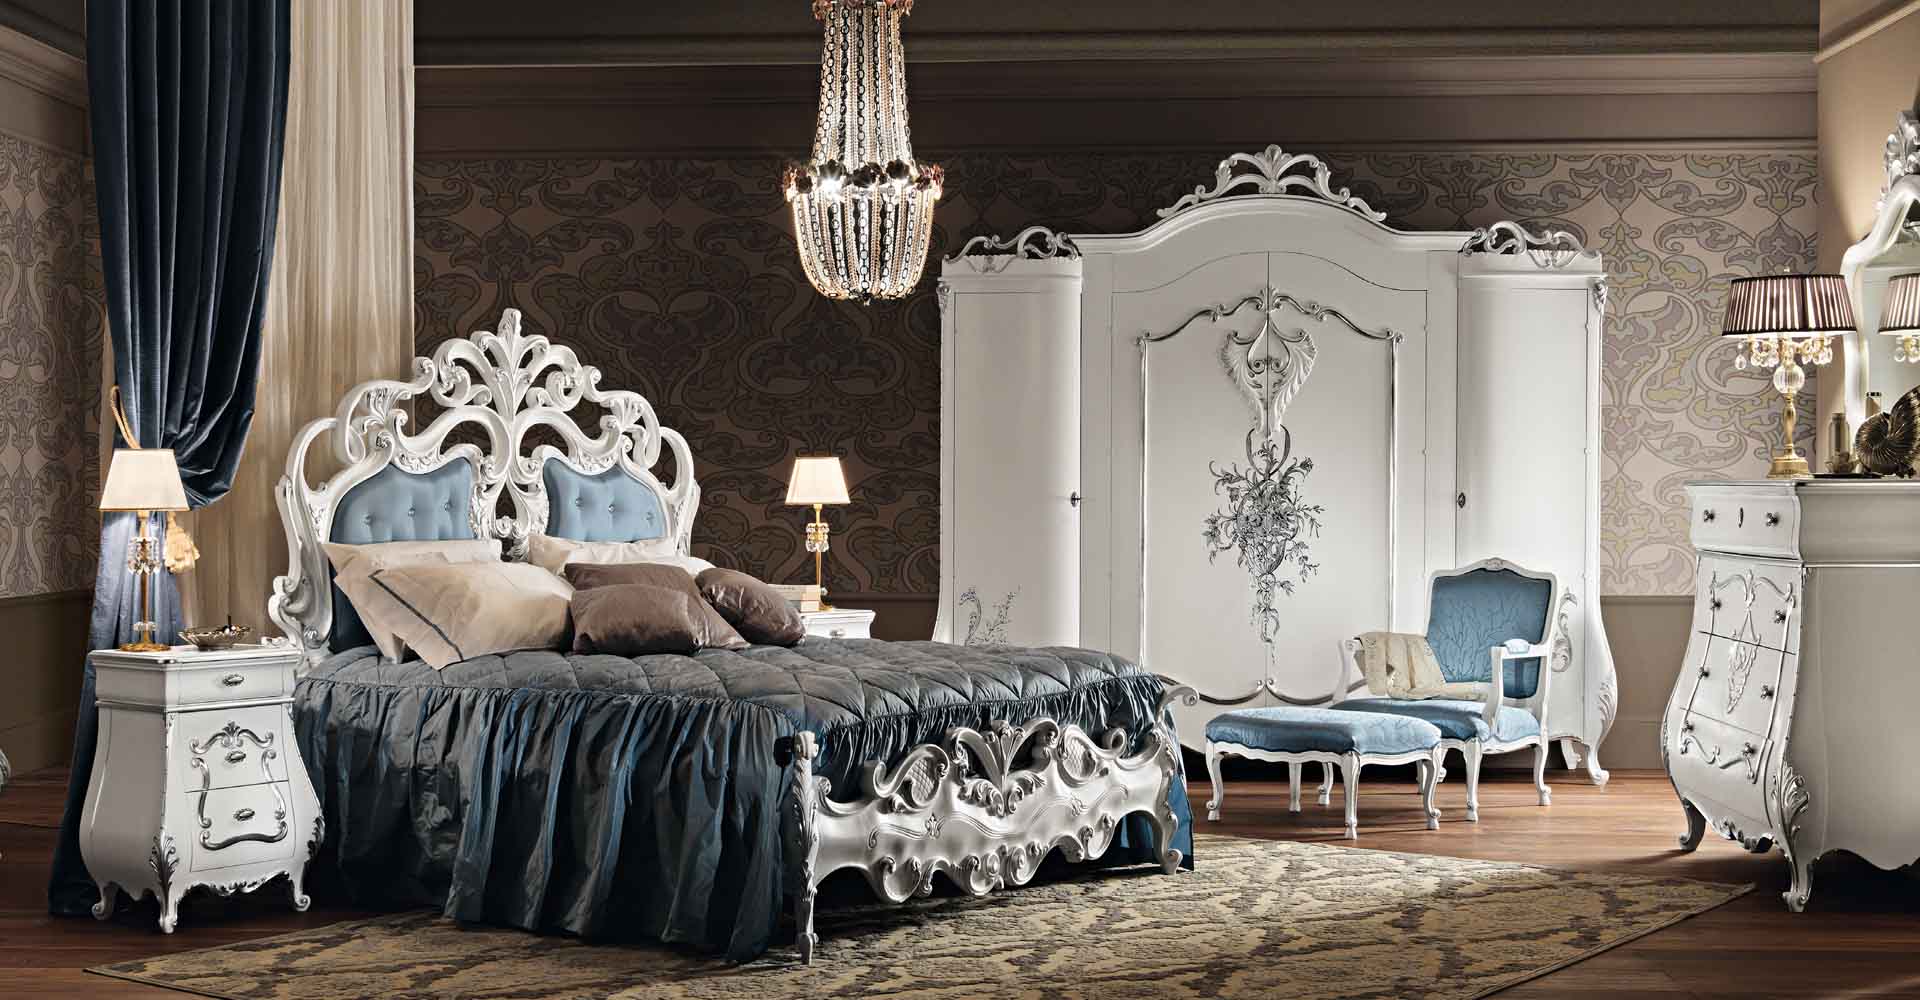 10 Amazing Luxury Bedroom Furniture Ideas